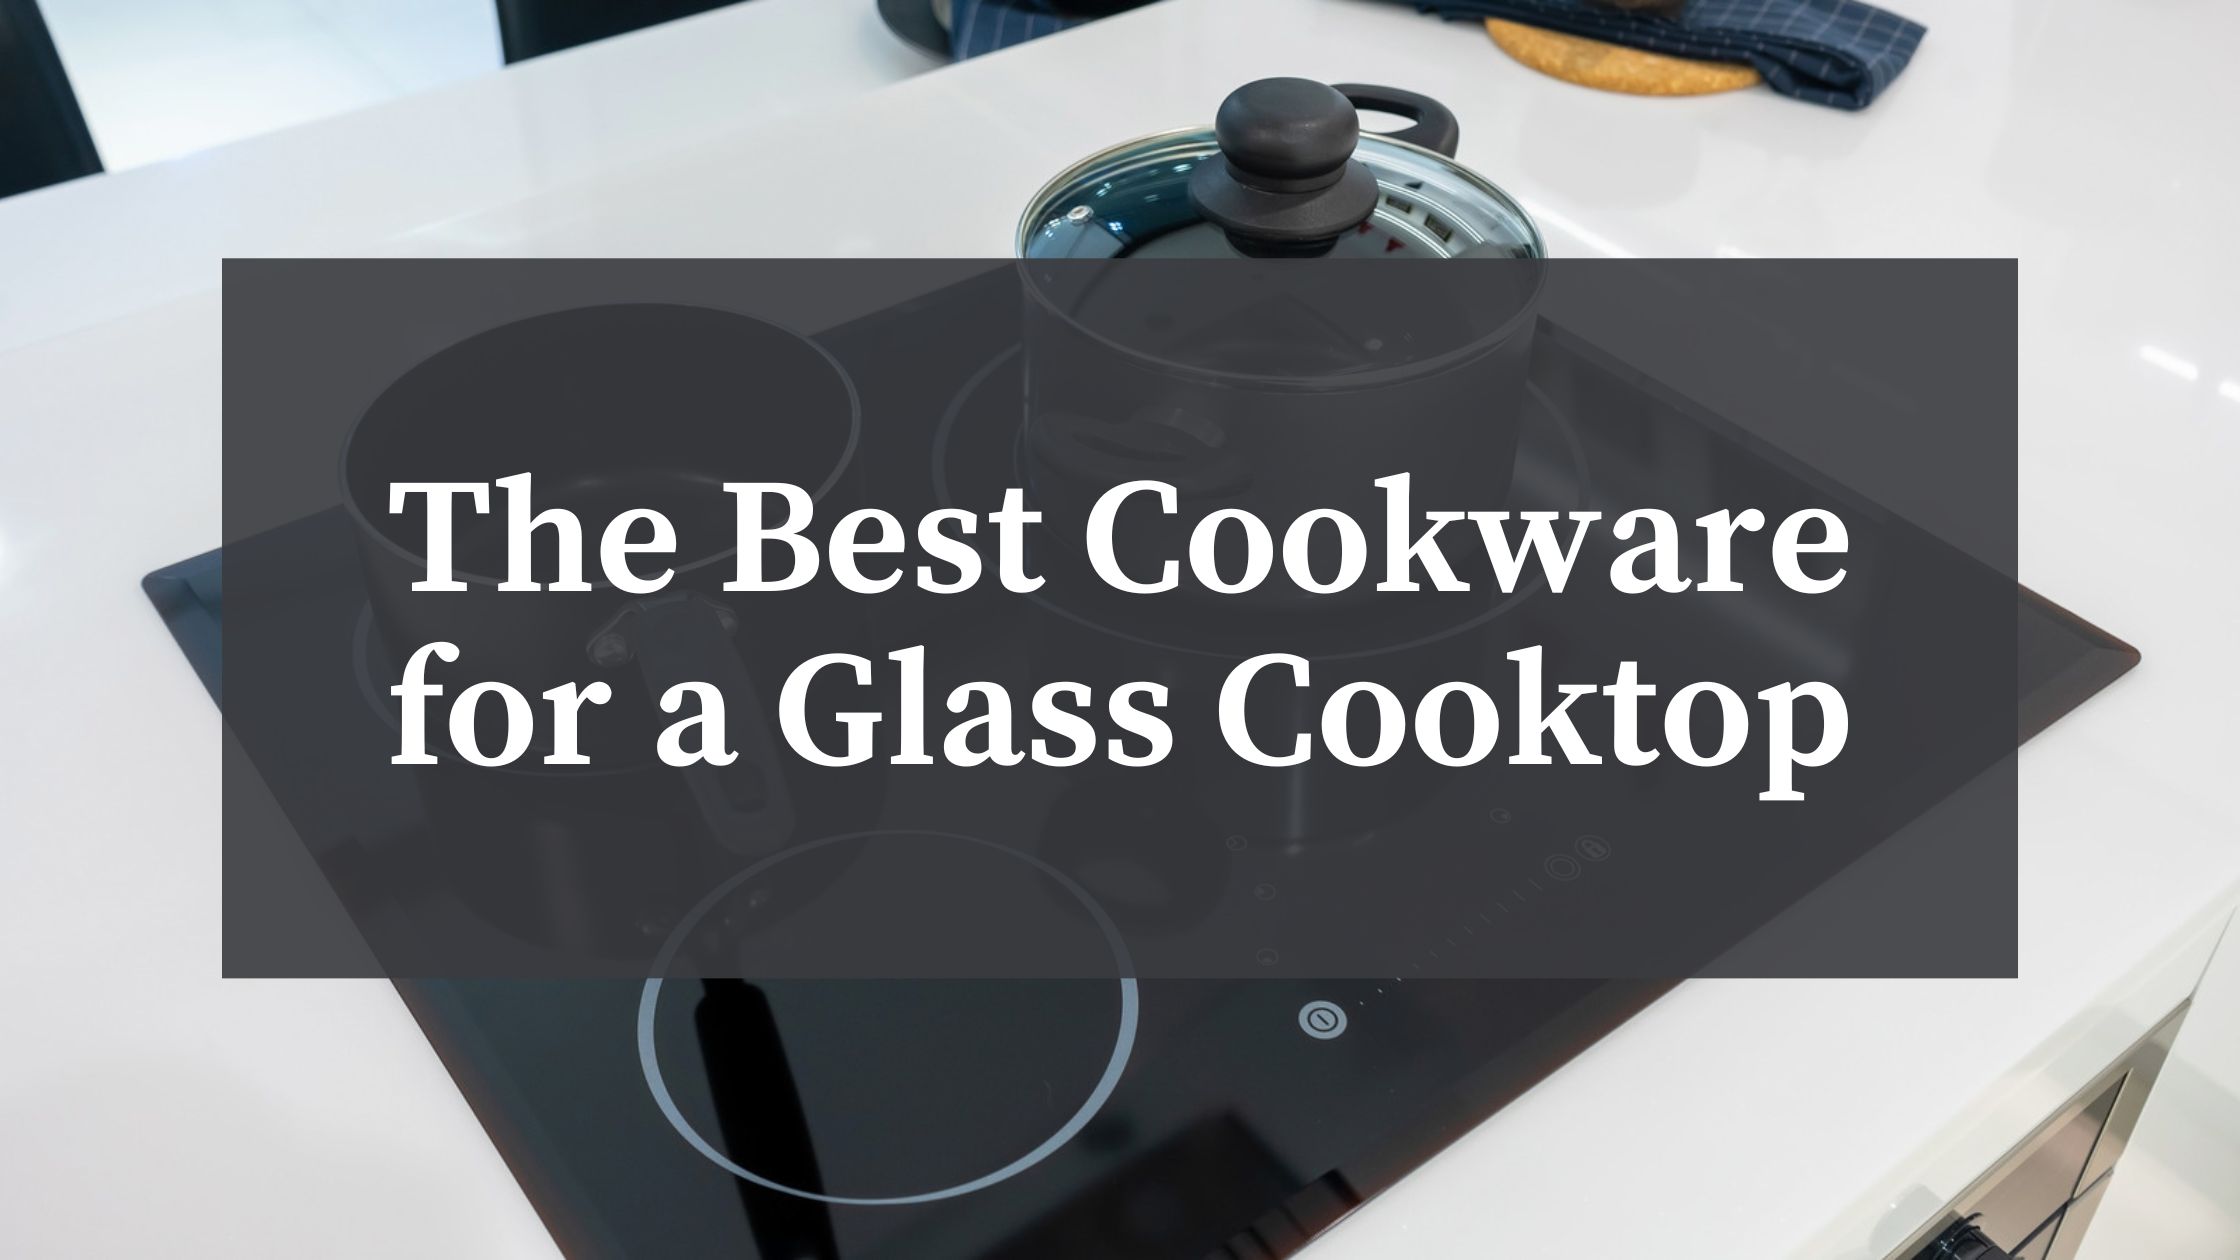 https://blog.athertonappliance.com/wp-content/uploads/2023/05/The-Best-Cookware-for-a-Glass-Cooktop.jpg